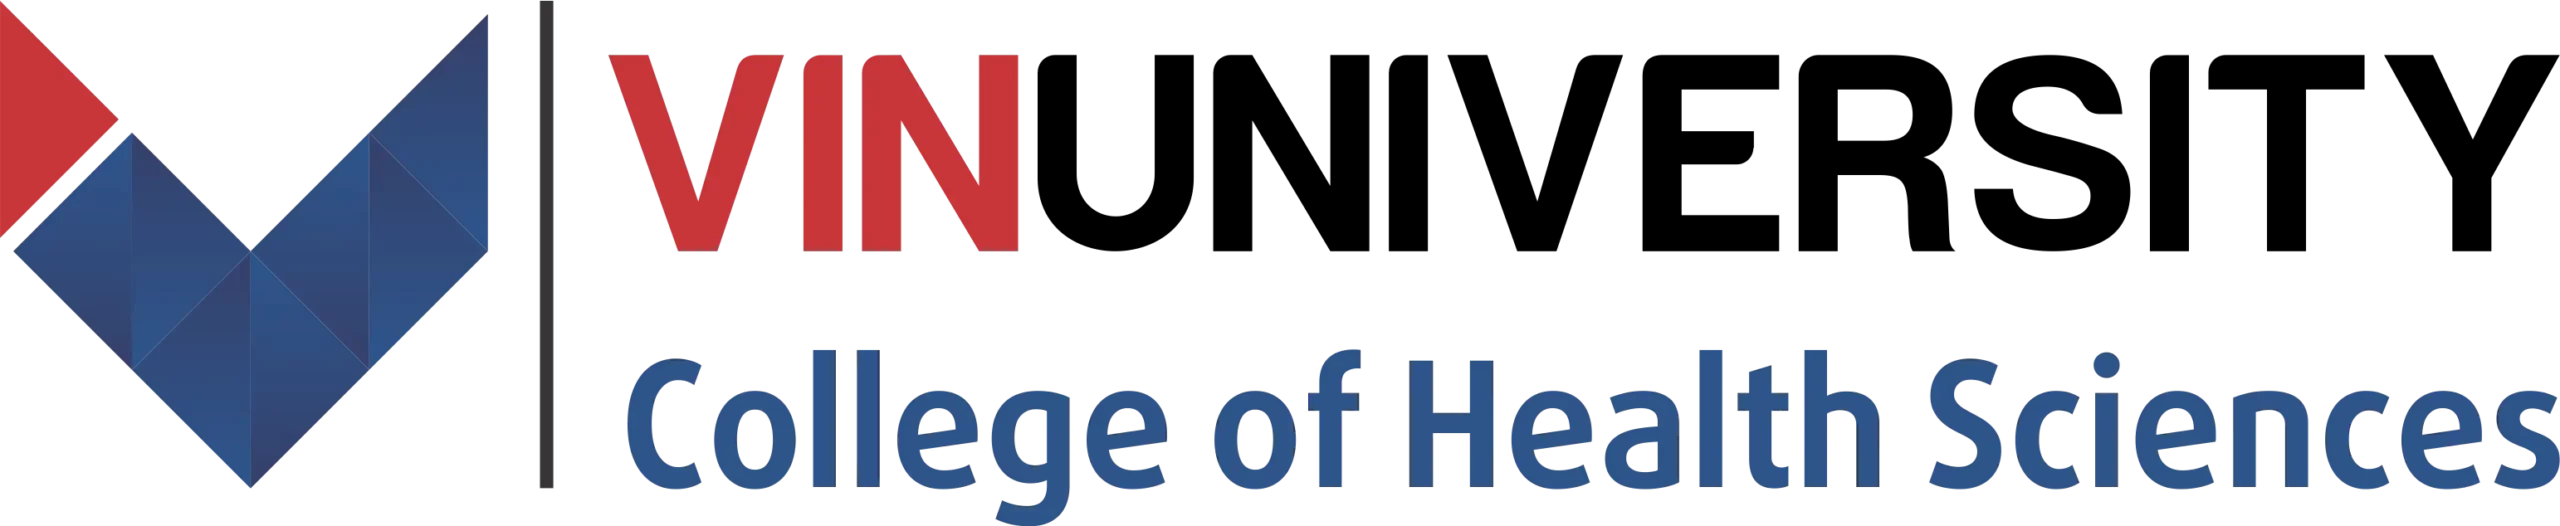 VinUniversity College of Health Sciences Vietnam logo